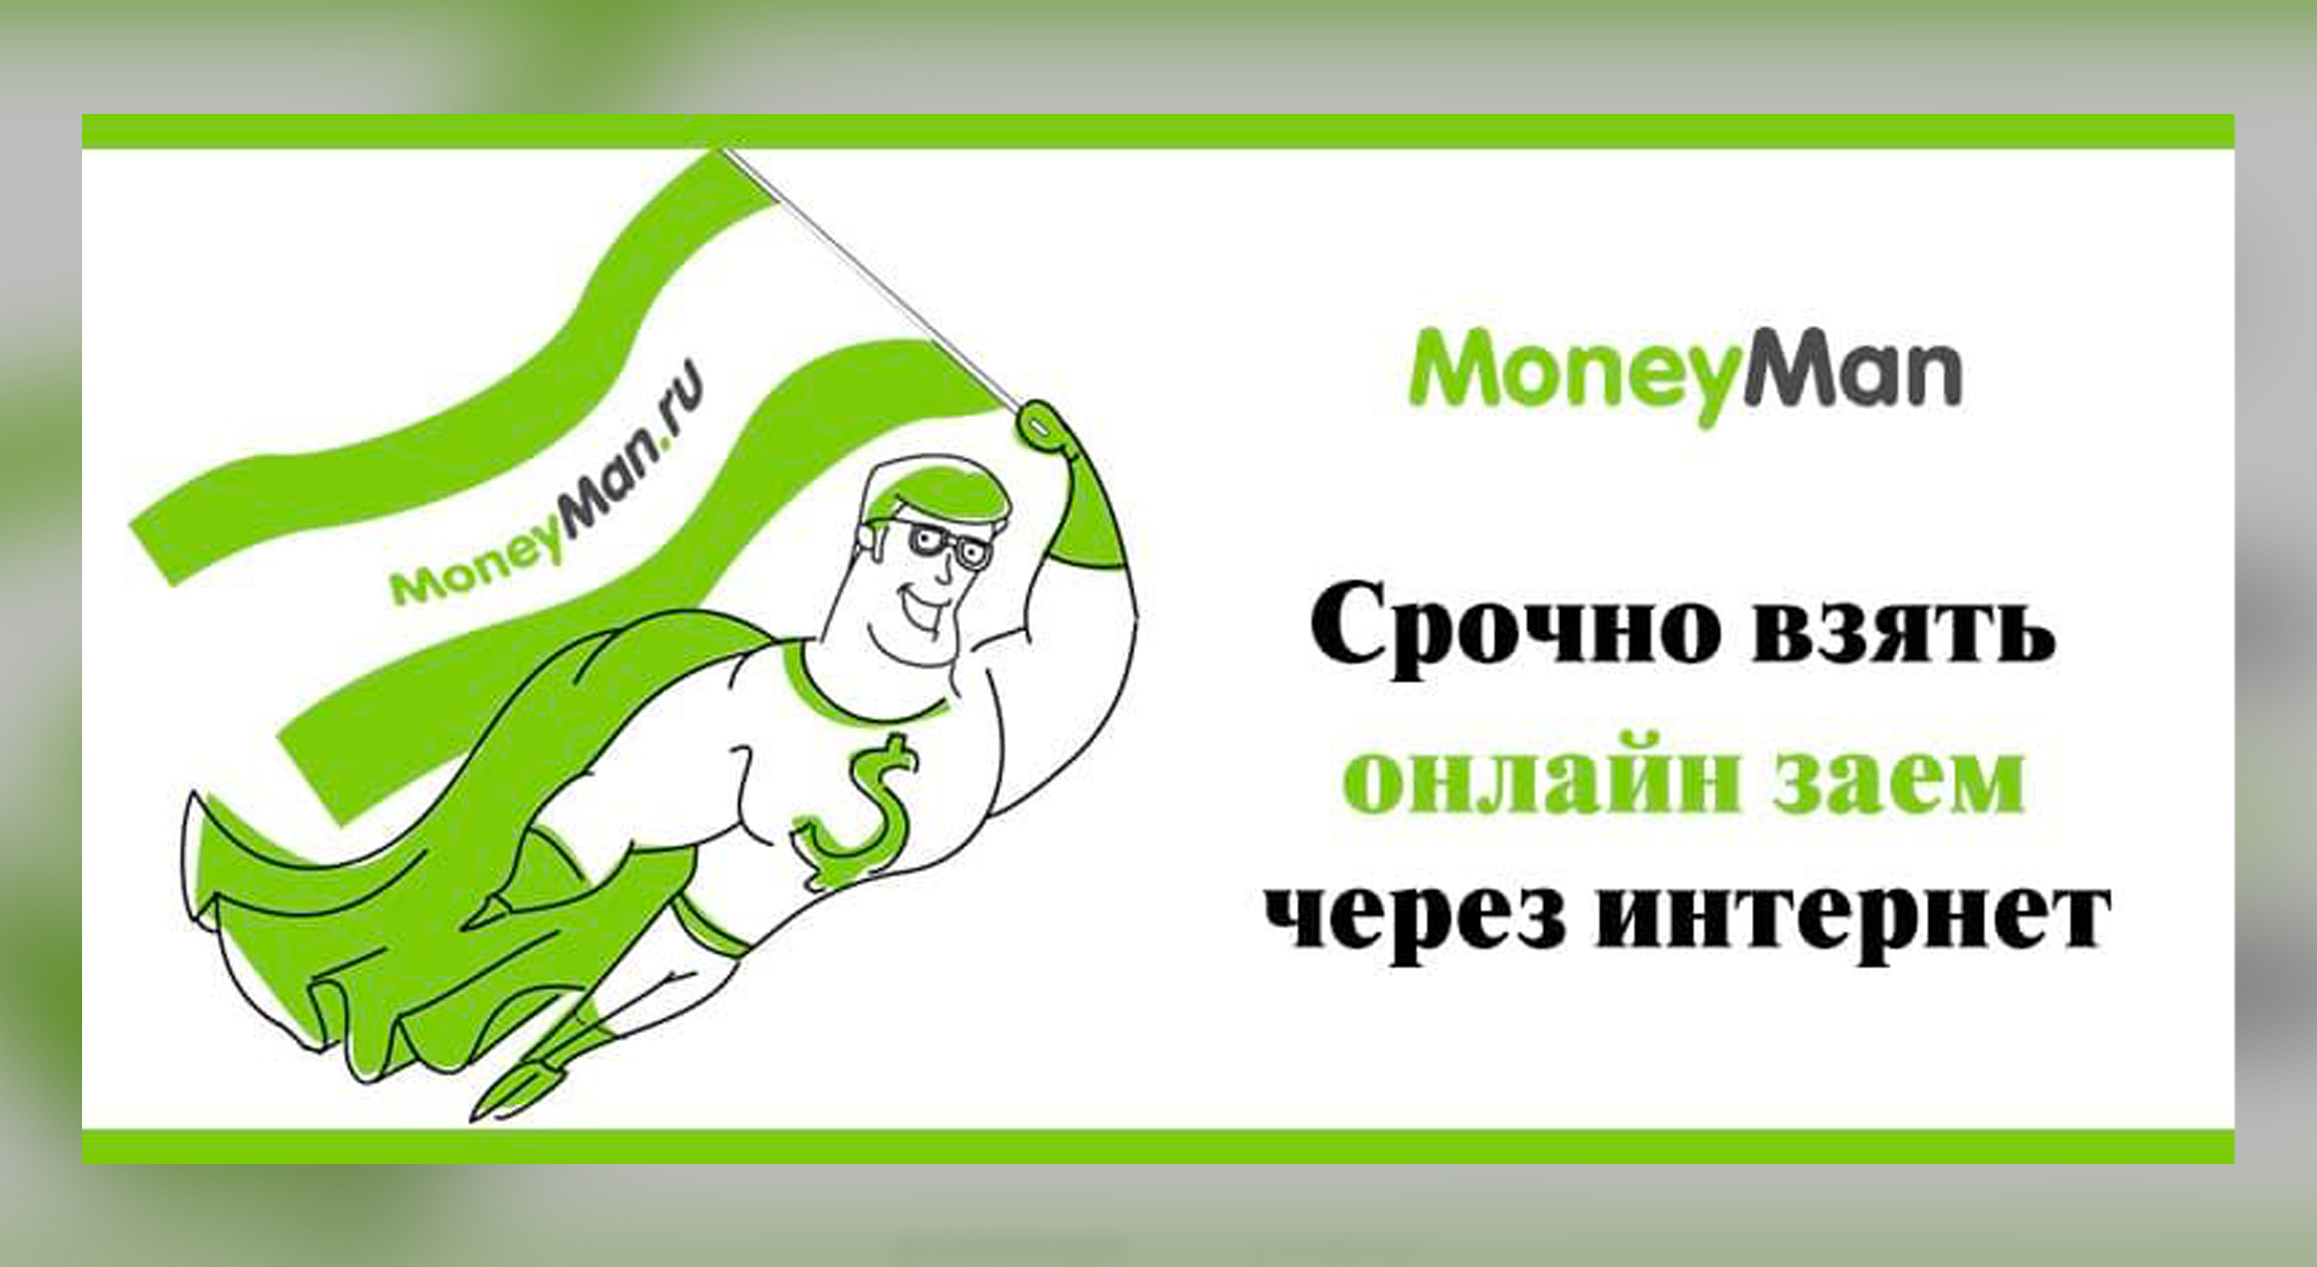 Символ MoneyMan — супермен в зелёном, как доллар, костюме. Фото © Zaym-onlayn.ru